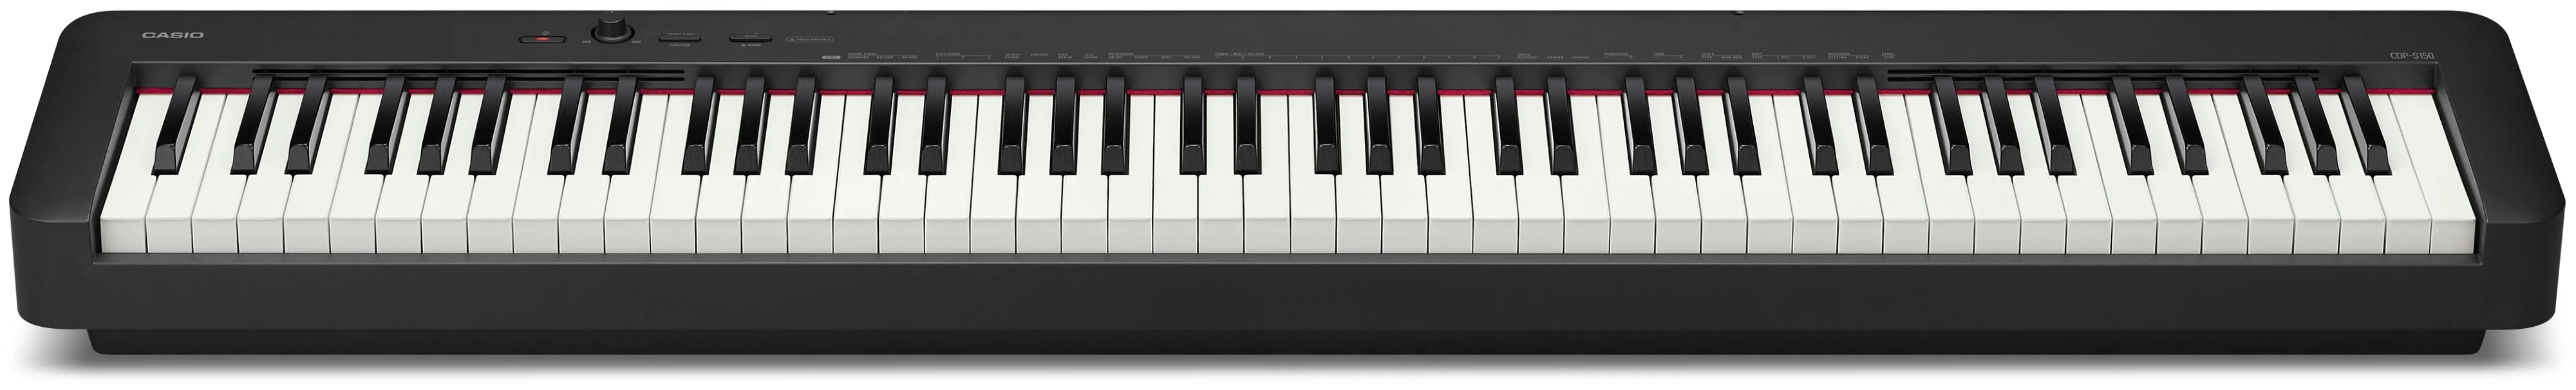 CASIO CDP-S150 - размер клавиш: полноразмерные